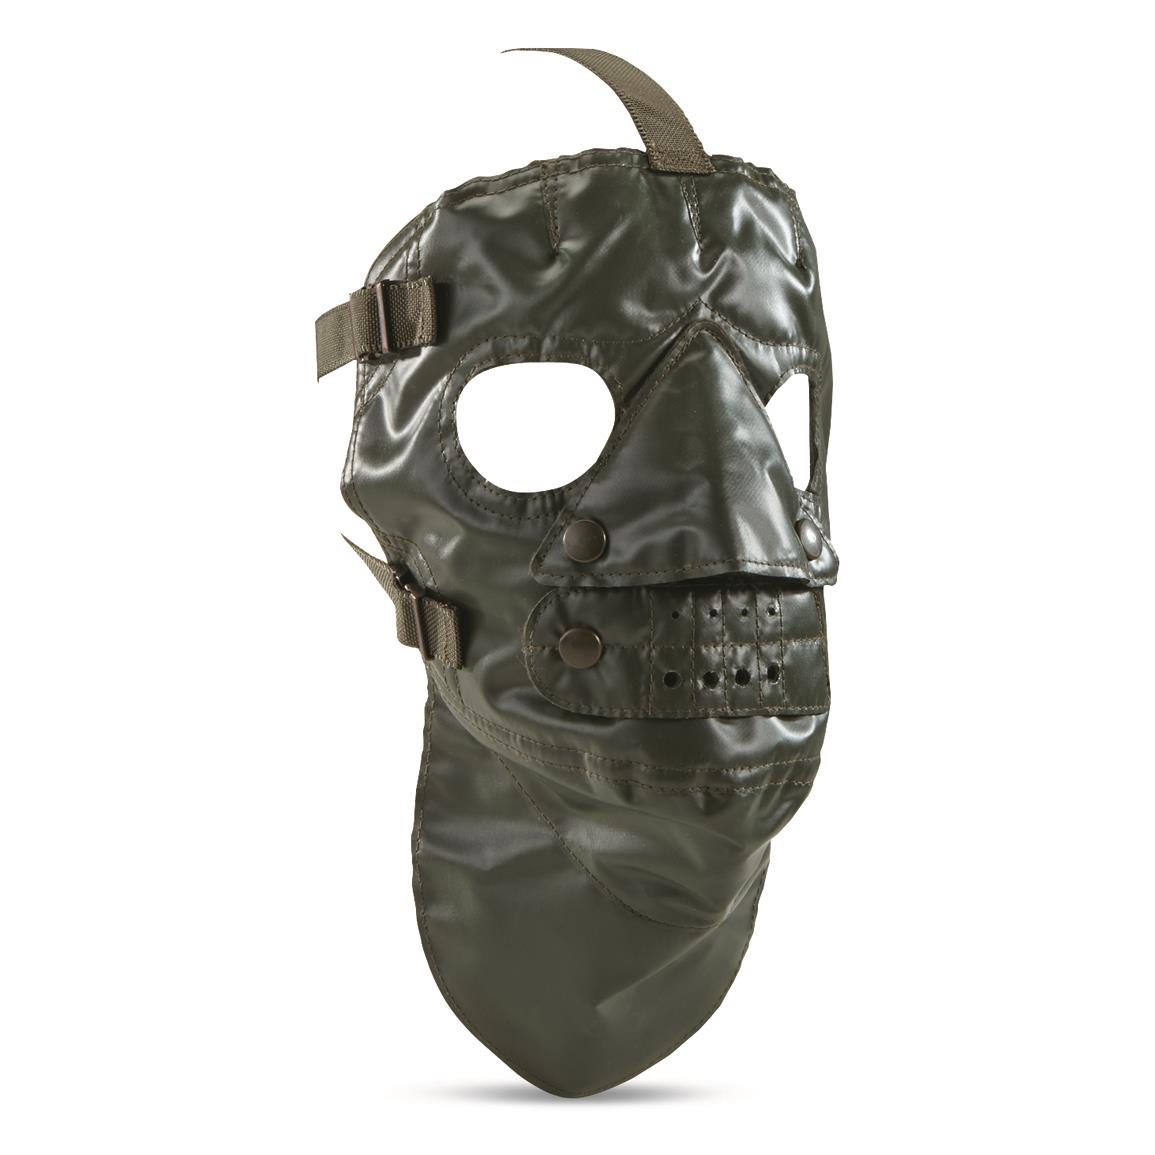 Belgian Military Surplus ECW Face Mask, New